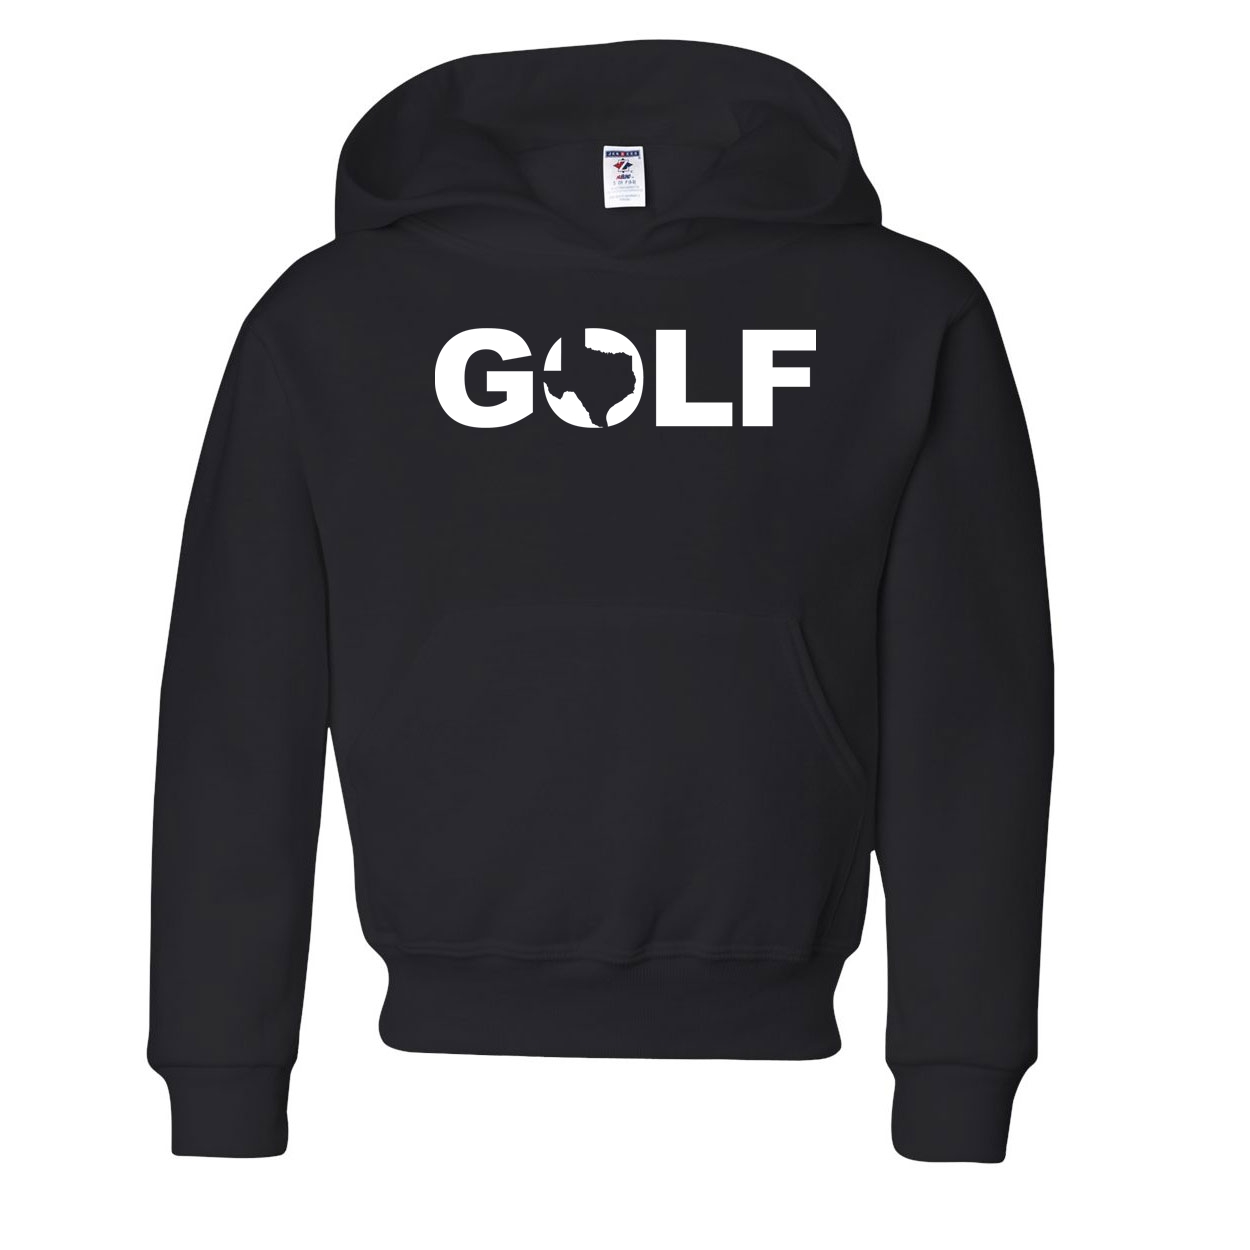 Golf Texas Classic Youth Sweatshirt Black (White Logo)